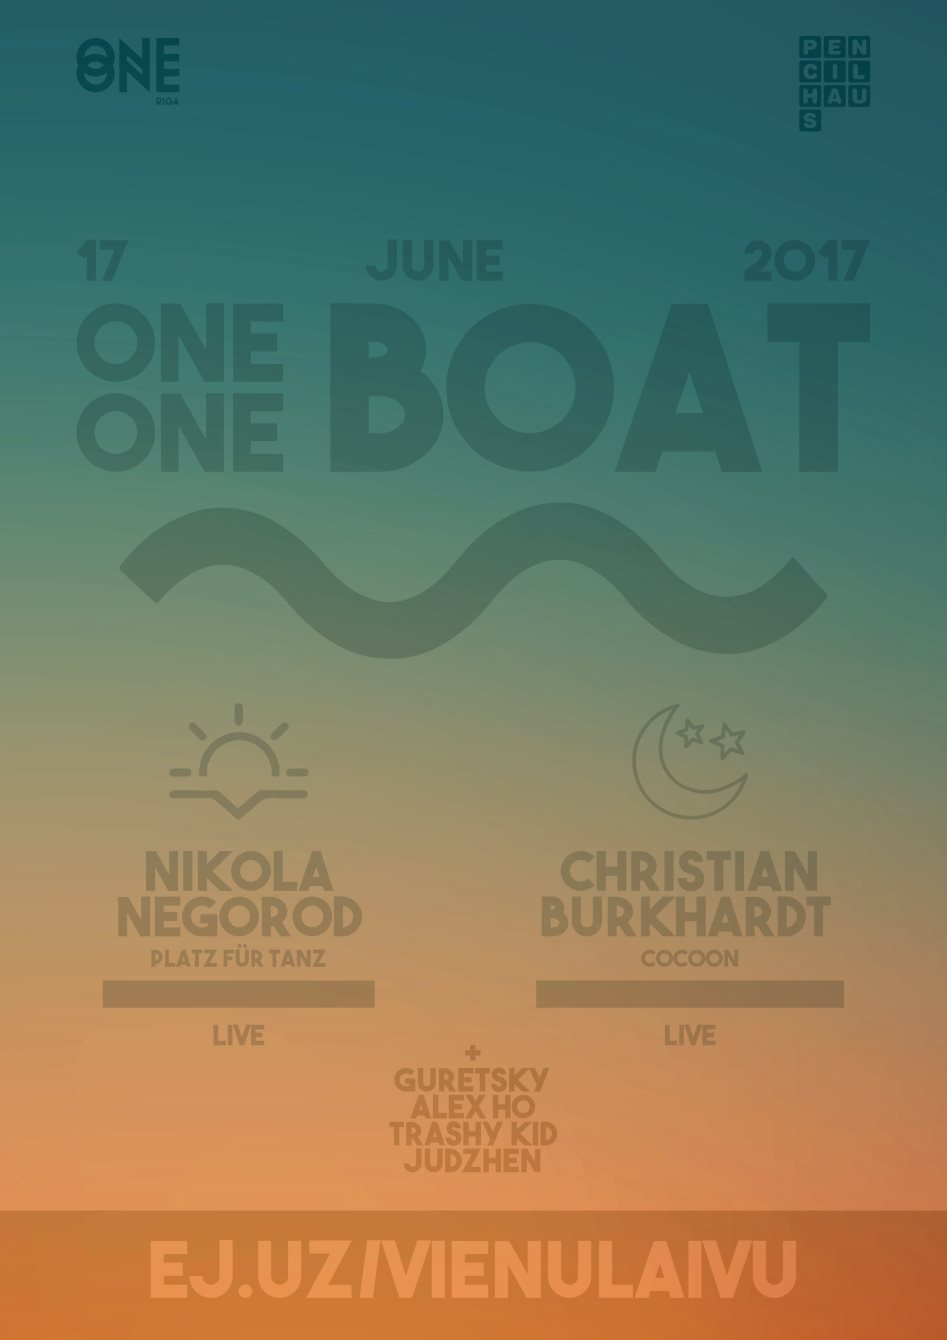 One One Boat: Christian Burkhardt - Flyer front